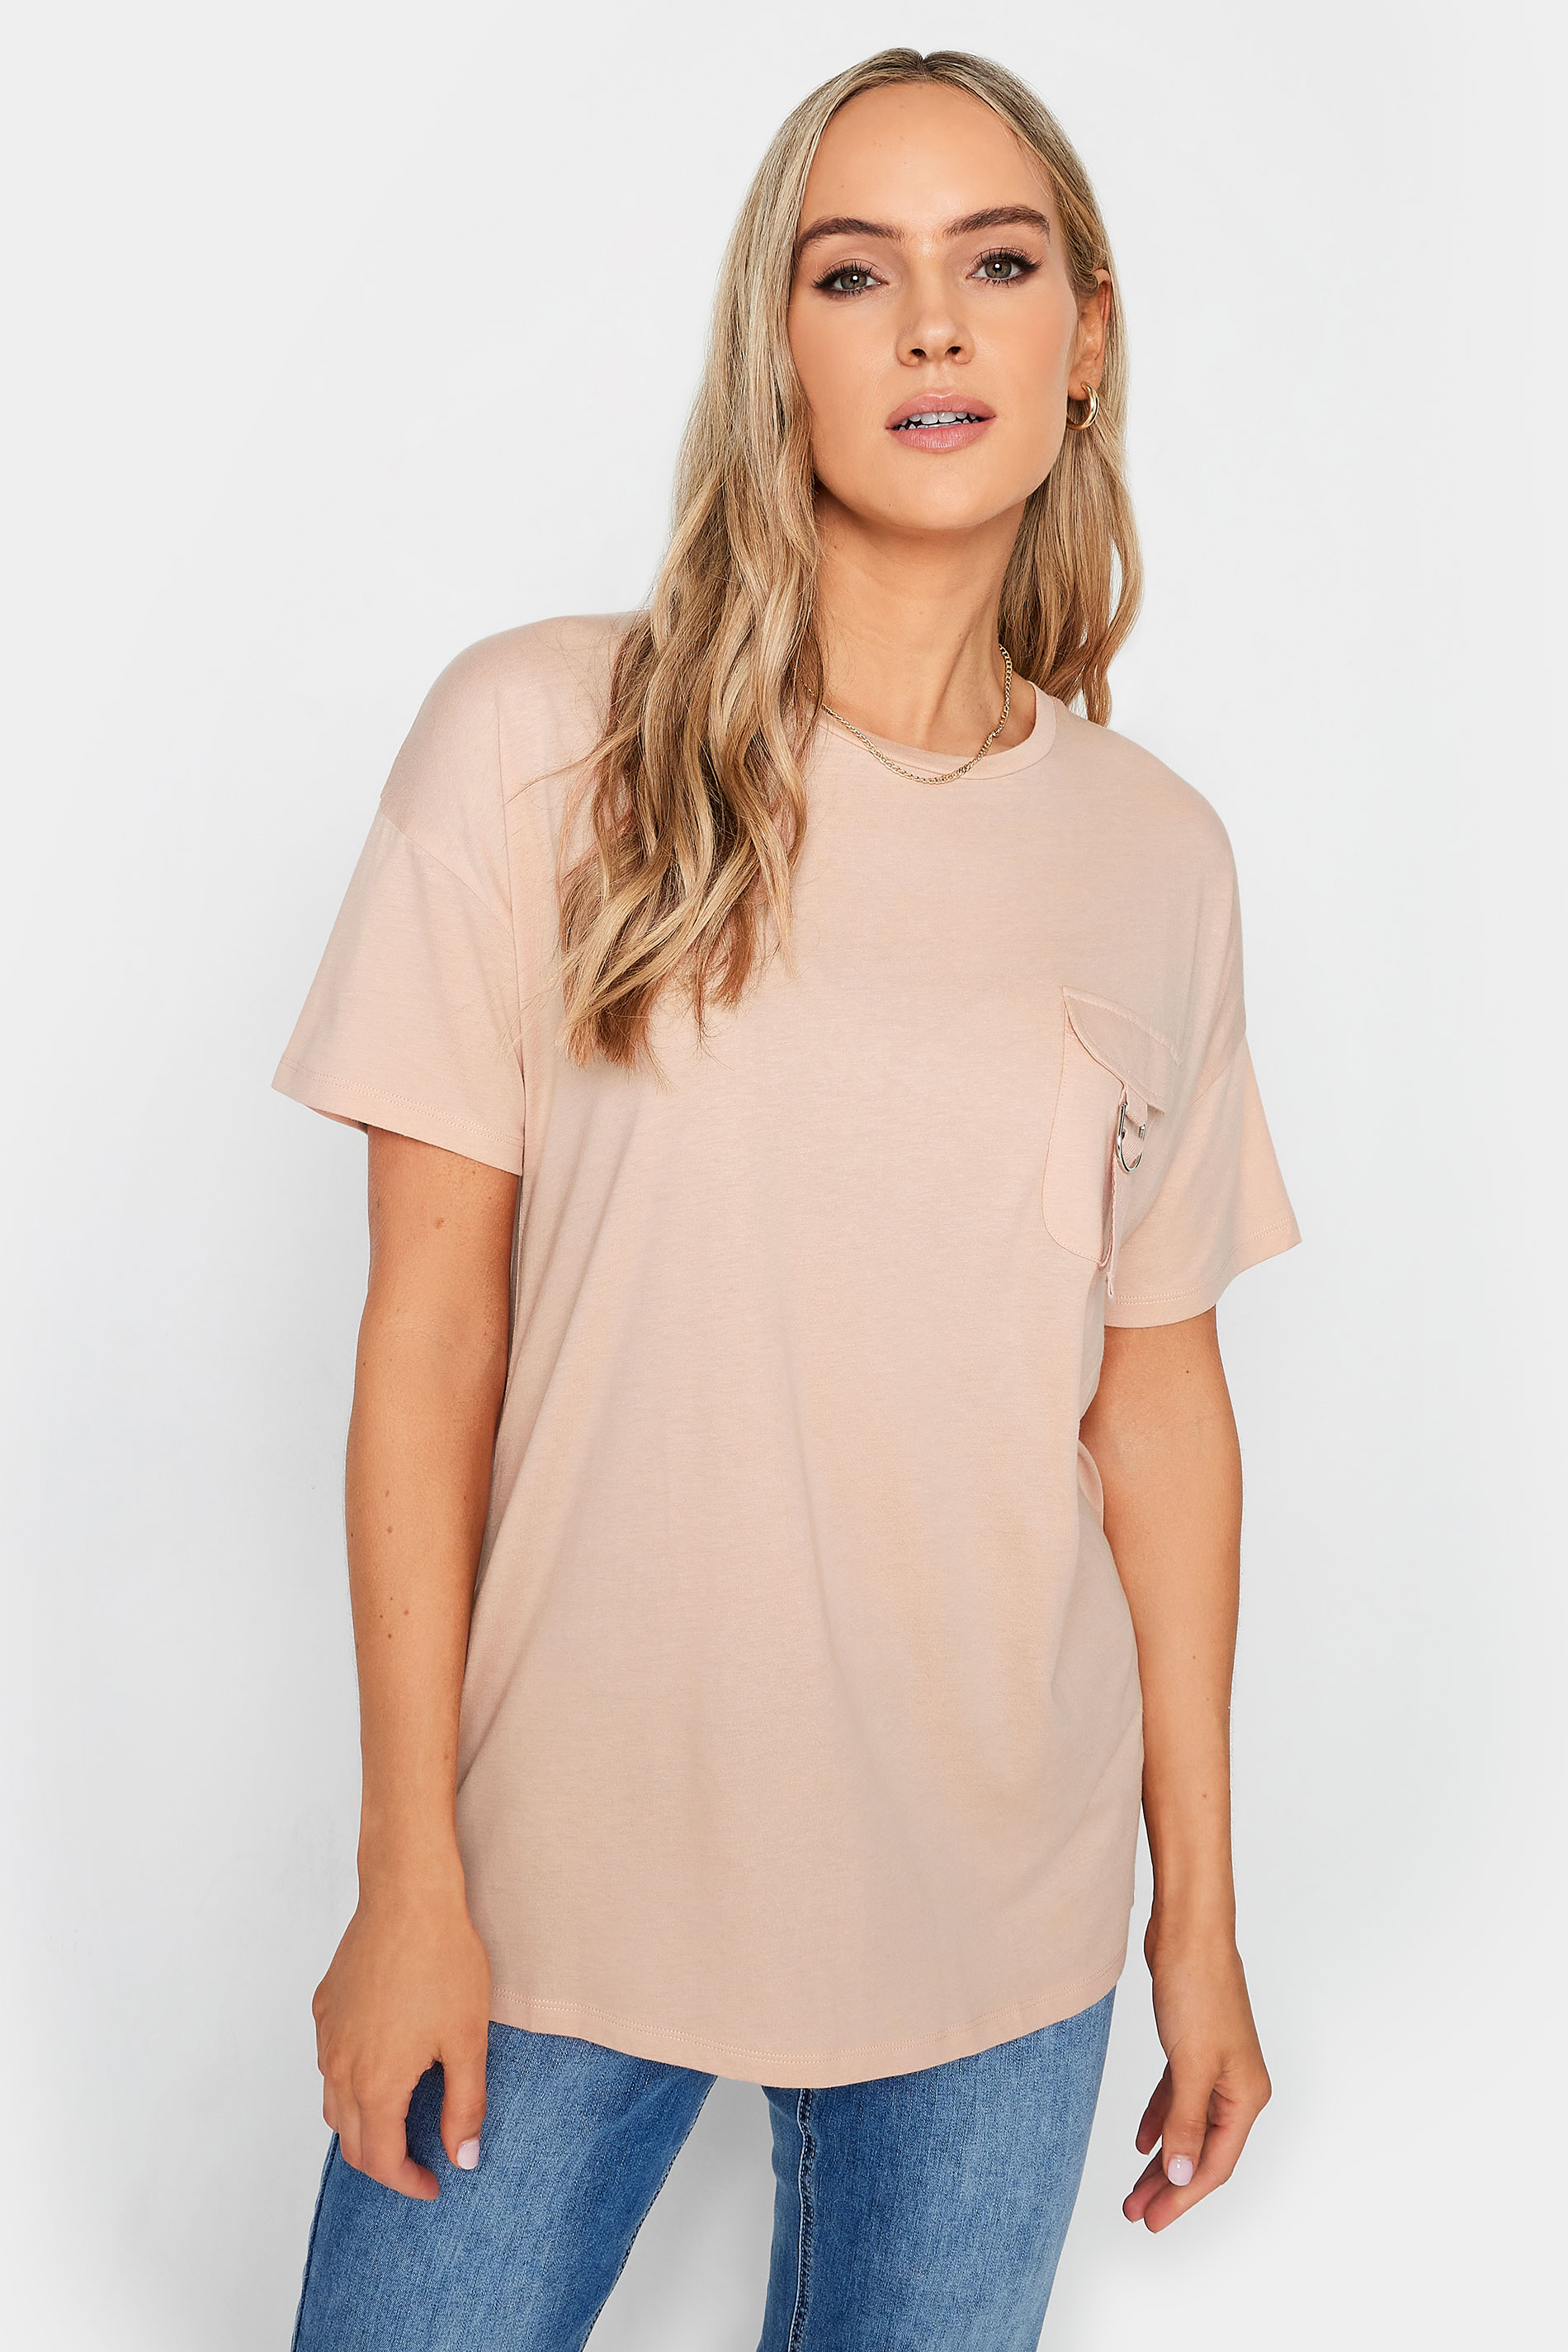 LTS Tall Blush Pink Utility Pocket Cotton T-Shirt | Long Tall Sally 1